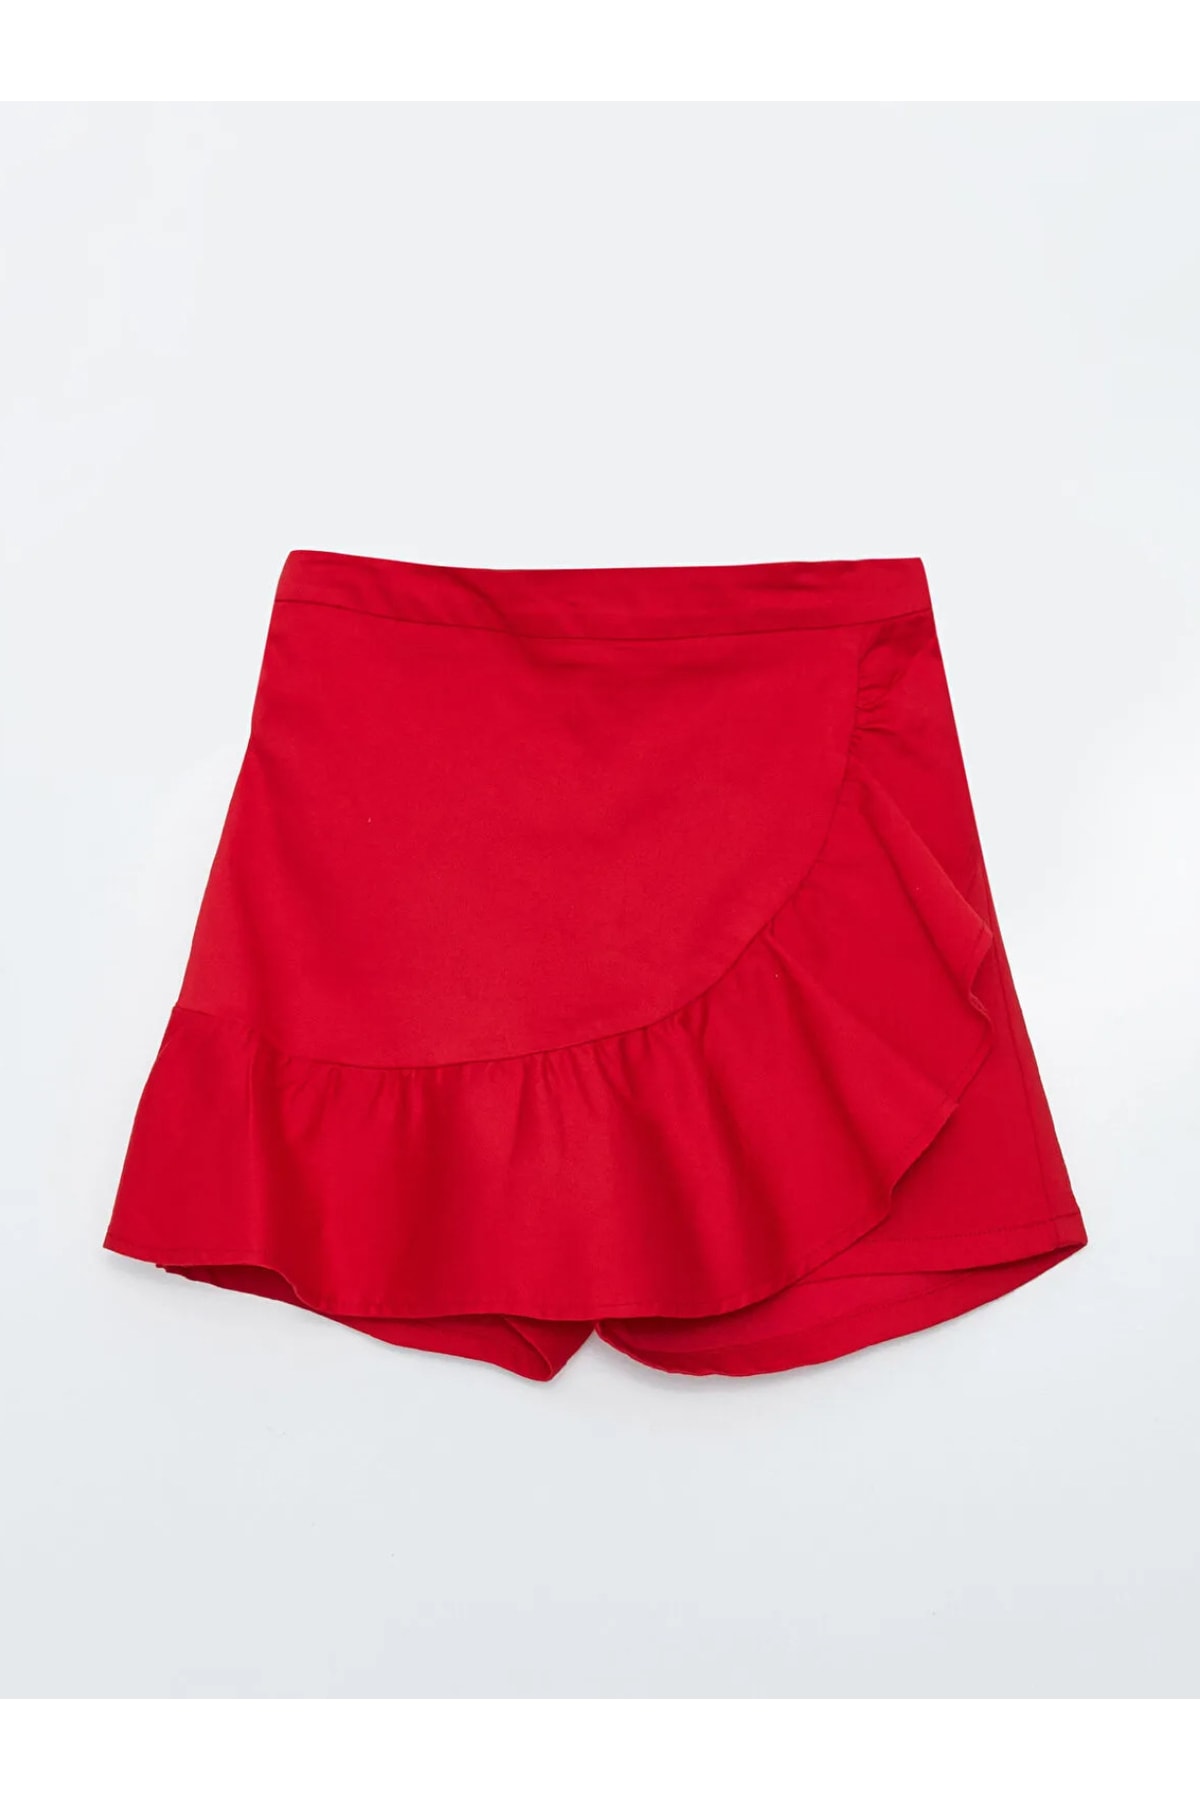 LC Waikiki Lcw Kids Basic Frill Detailed Girl Shorts Skirt